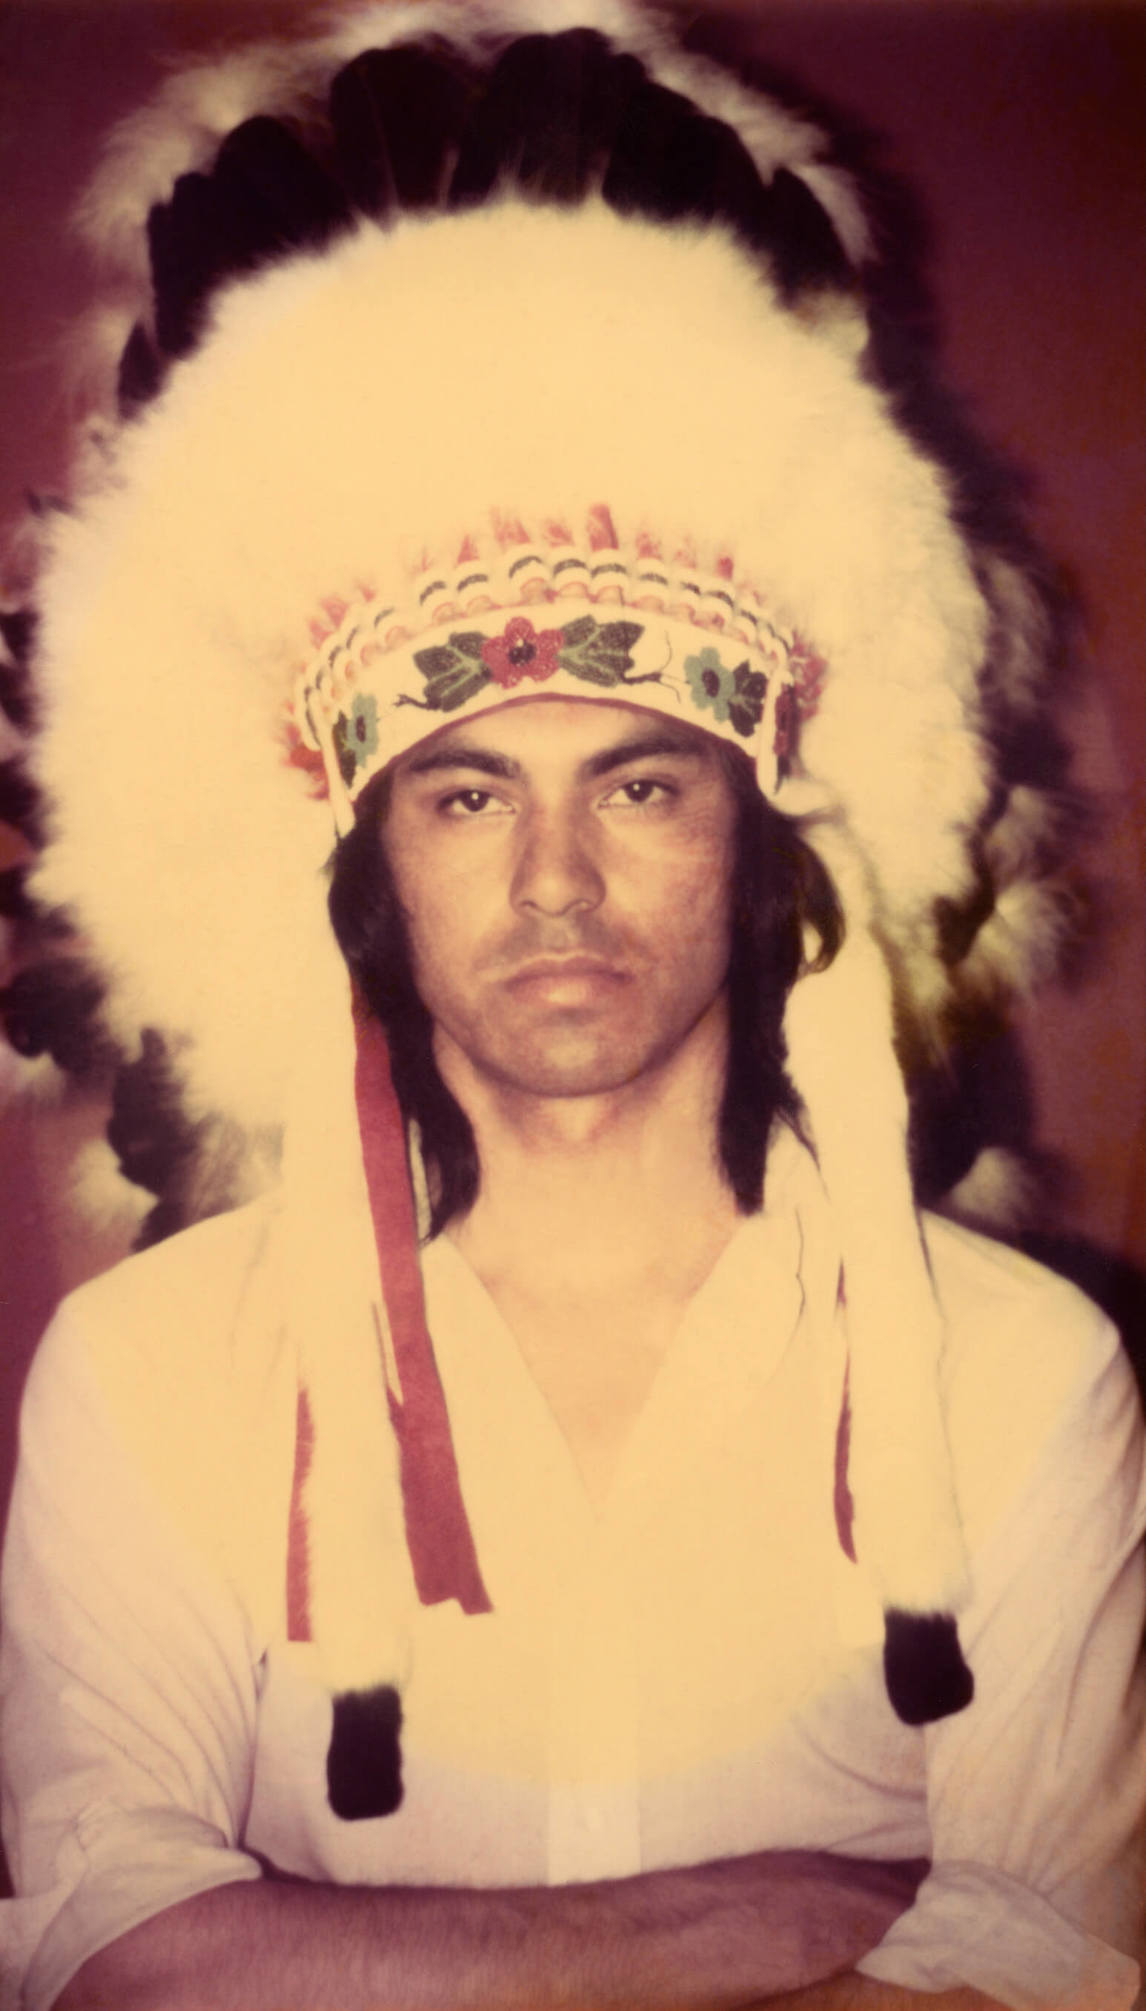  Robert Houle wearing a headdress, 1974